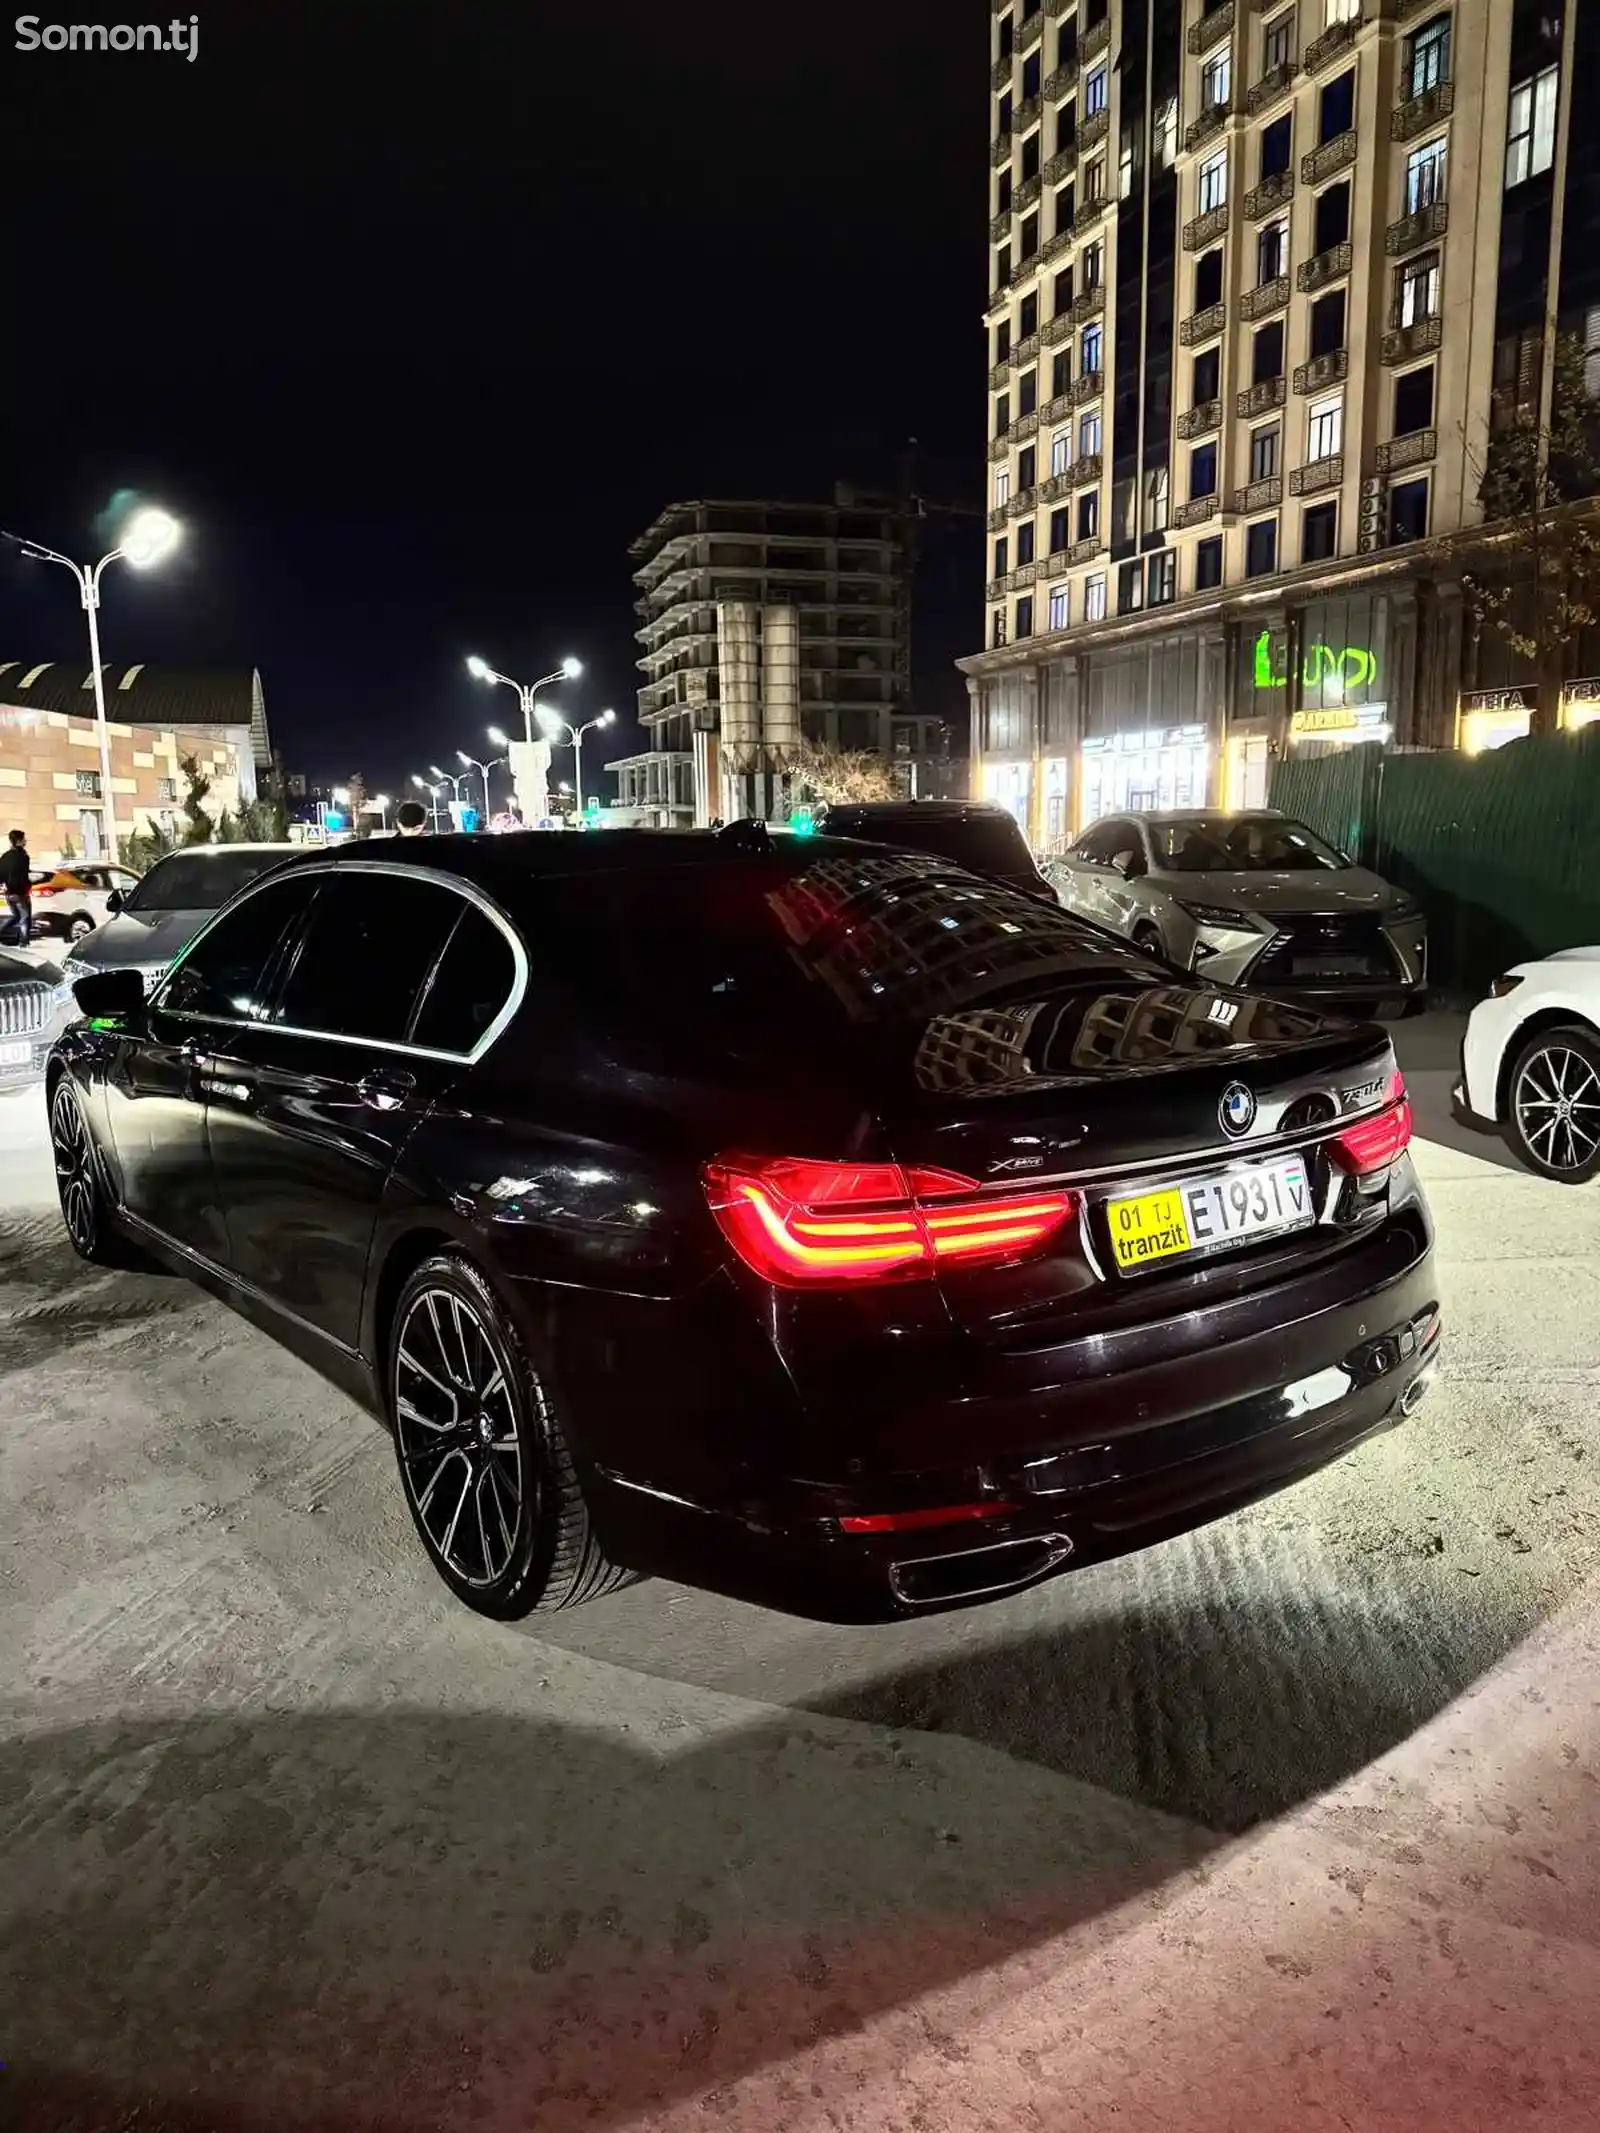 BMW 7 series, 2018-2